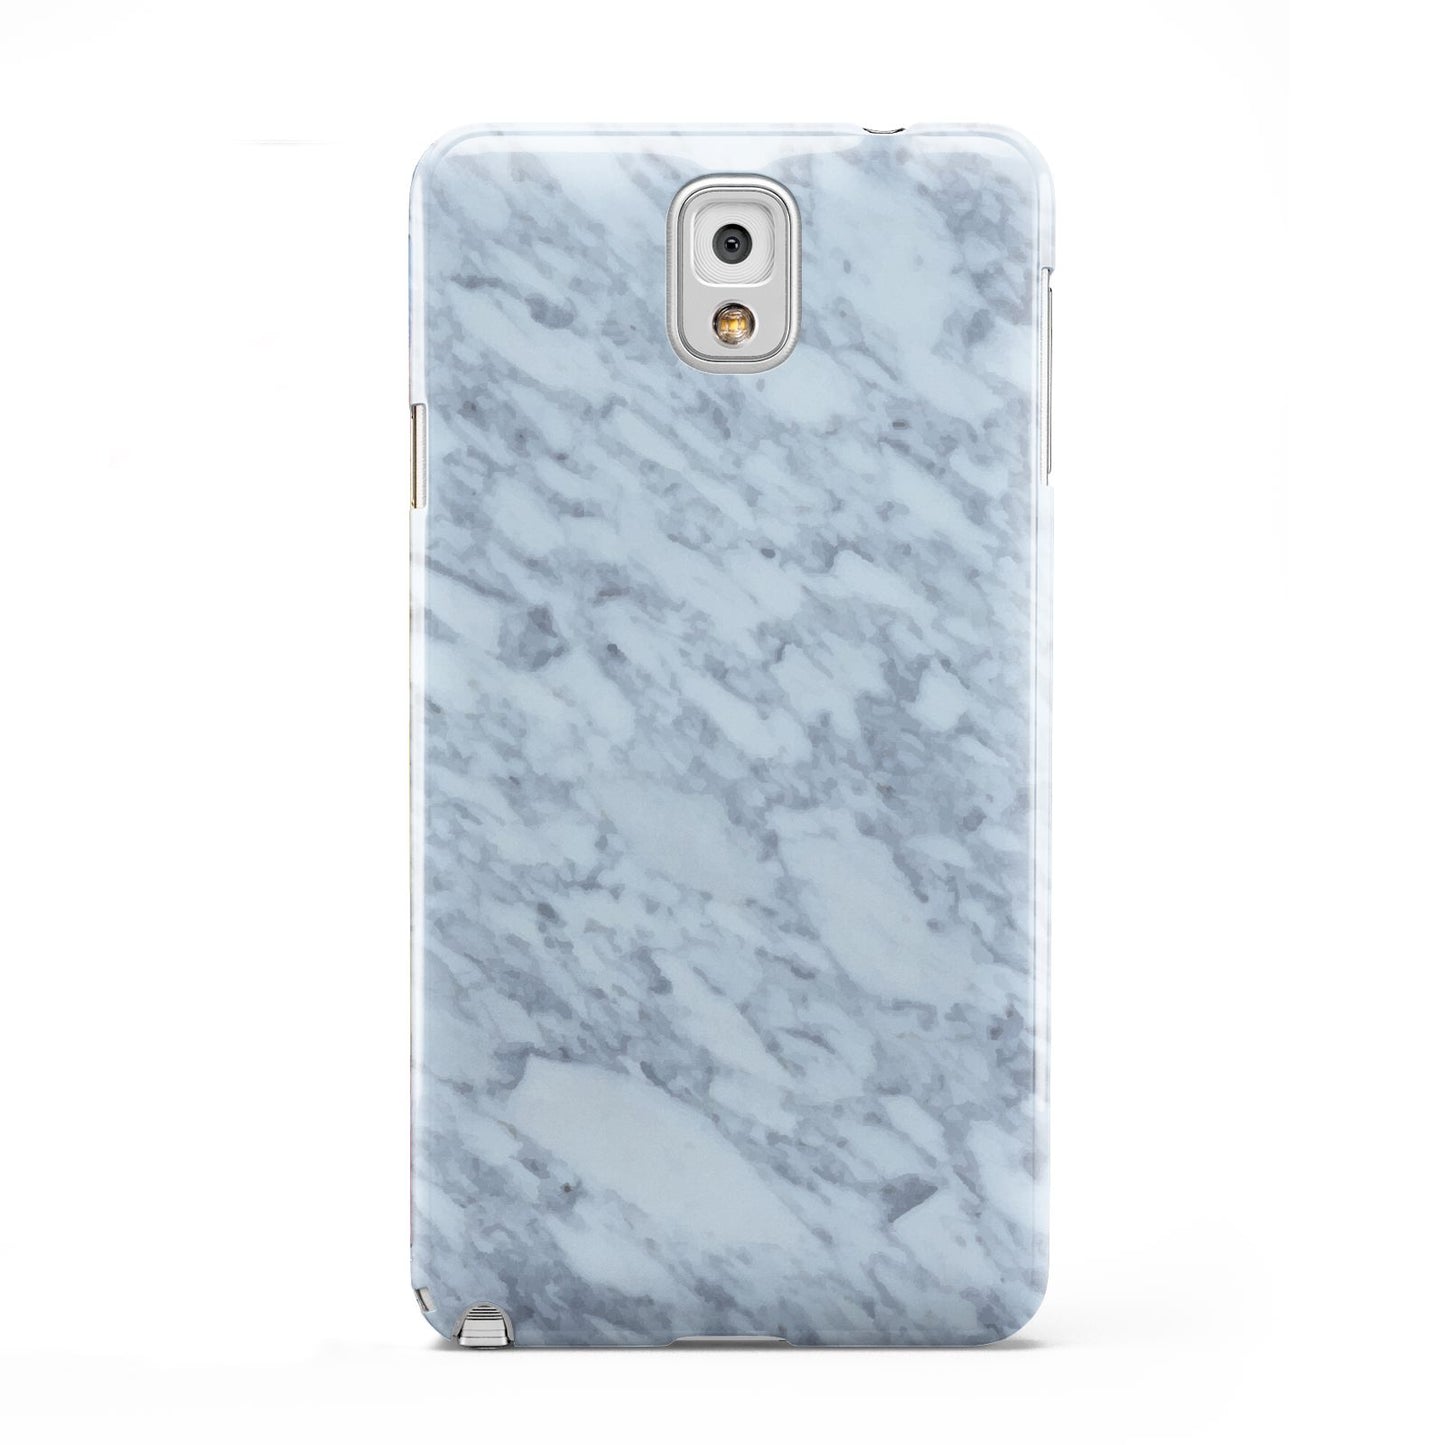 Faux Marble Grey 2 Samsung Galaxy Note 3 Case